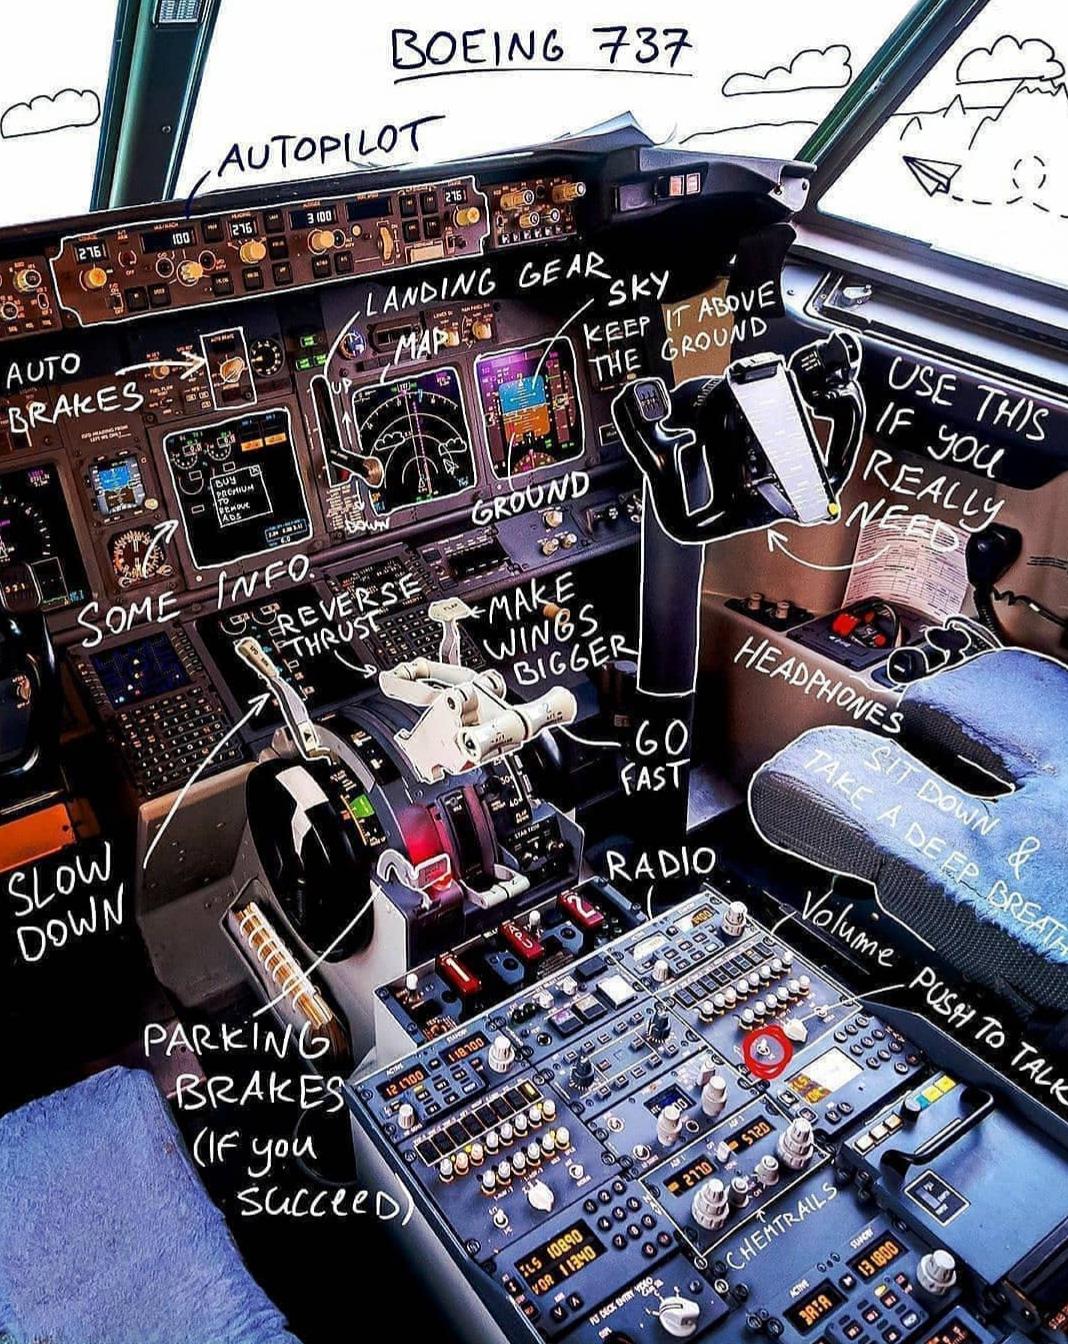 Boeing 737 Cockpit, a guide.